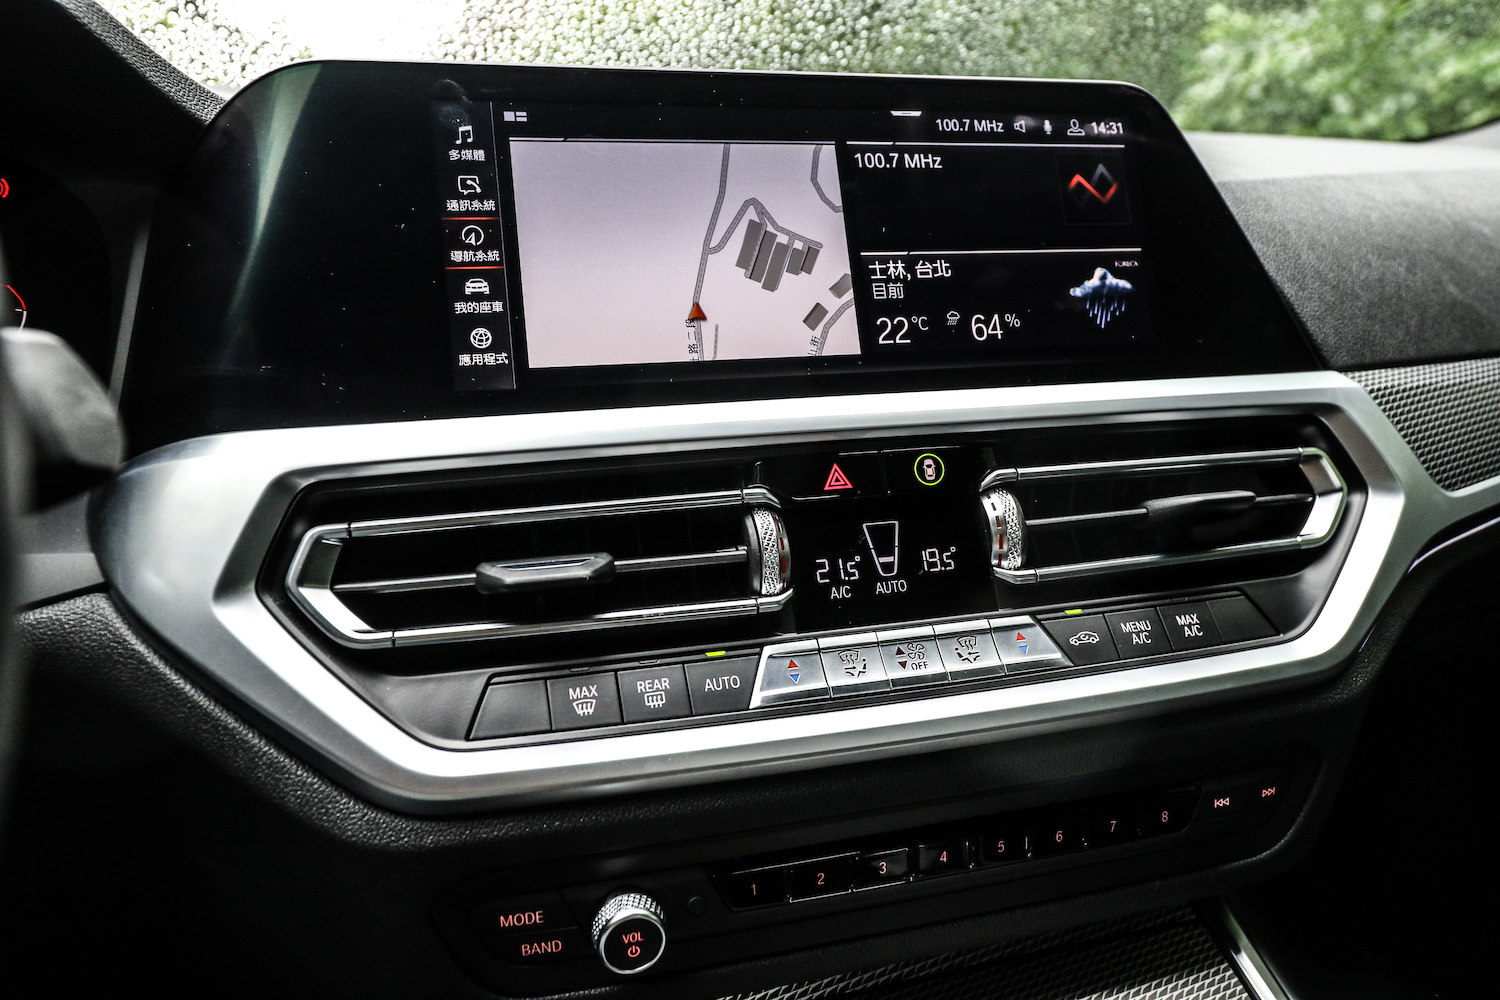 320i M Sport 導入最新 iDrive 7.0 系統， 支援 Apple CarPlay。